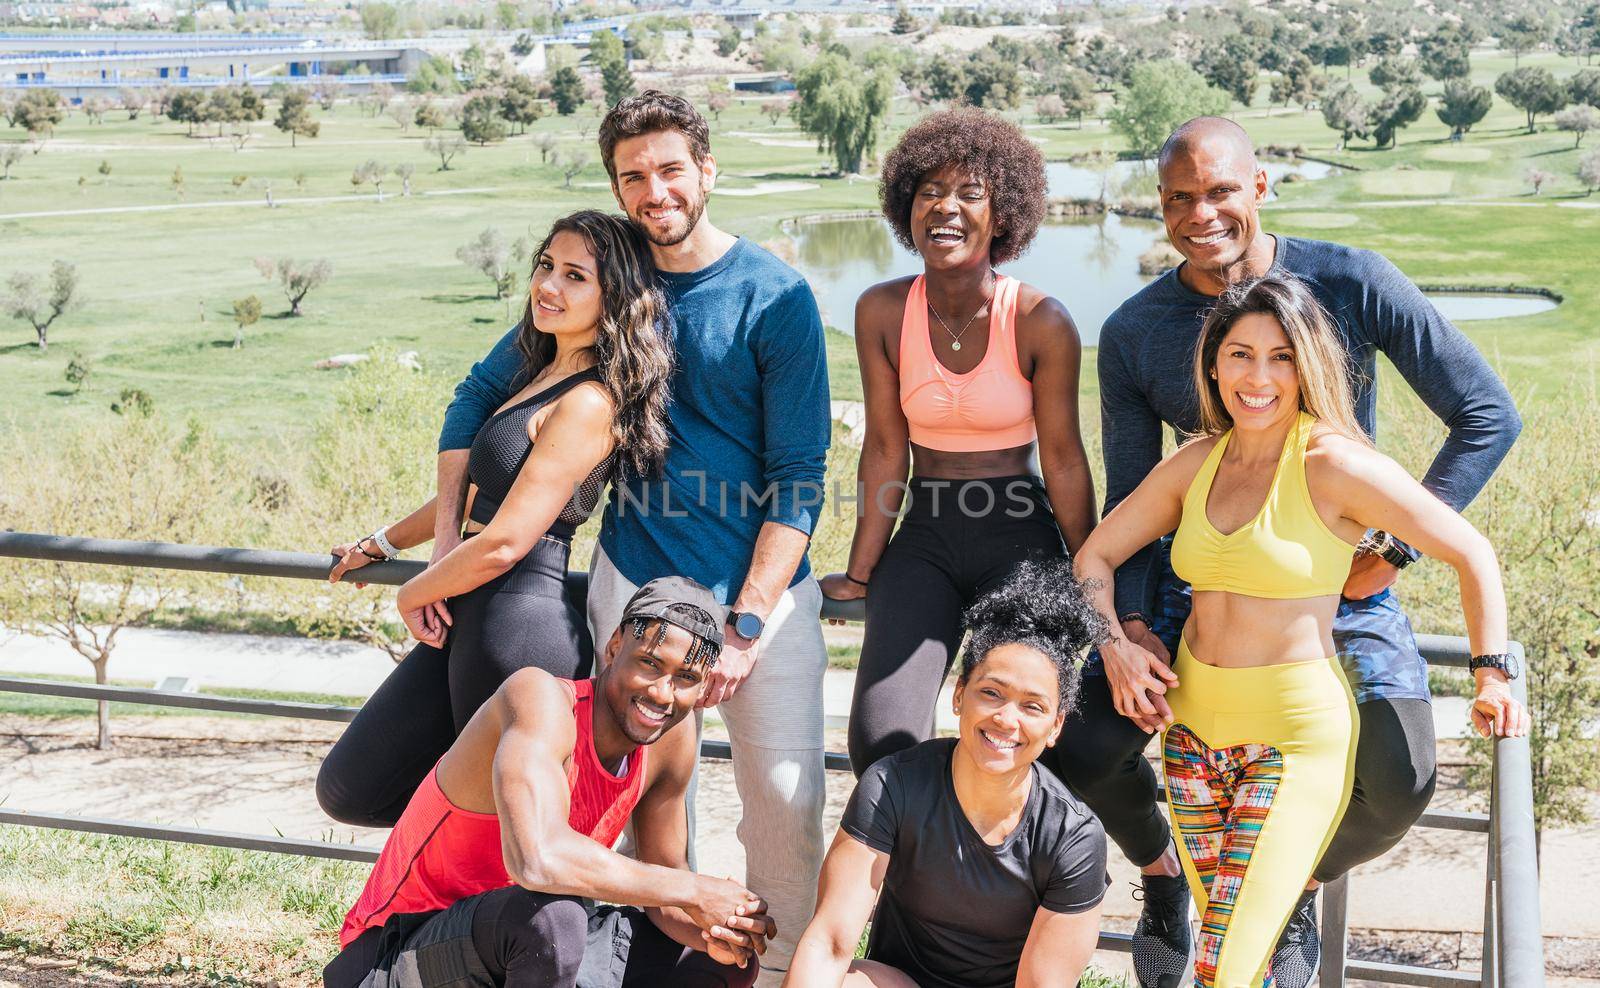 Group portrait of runners smiling at camera. Horizontal framing.